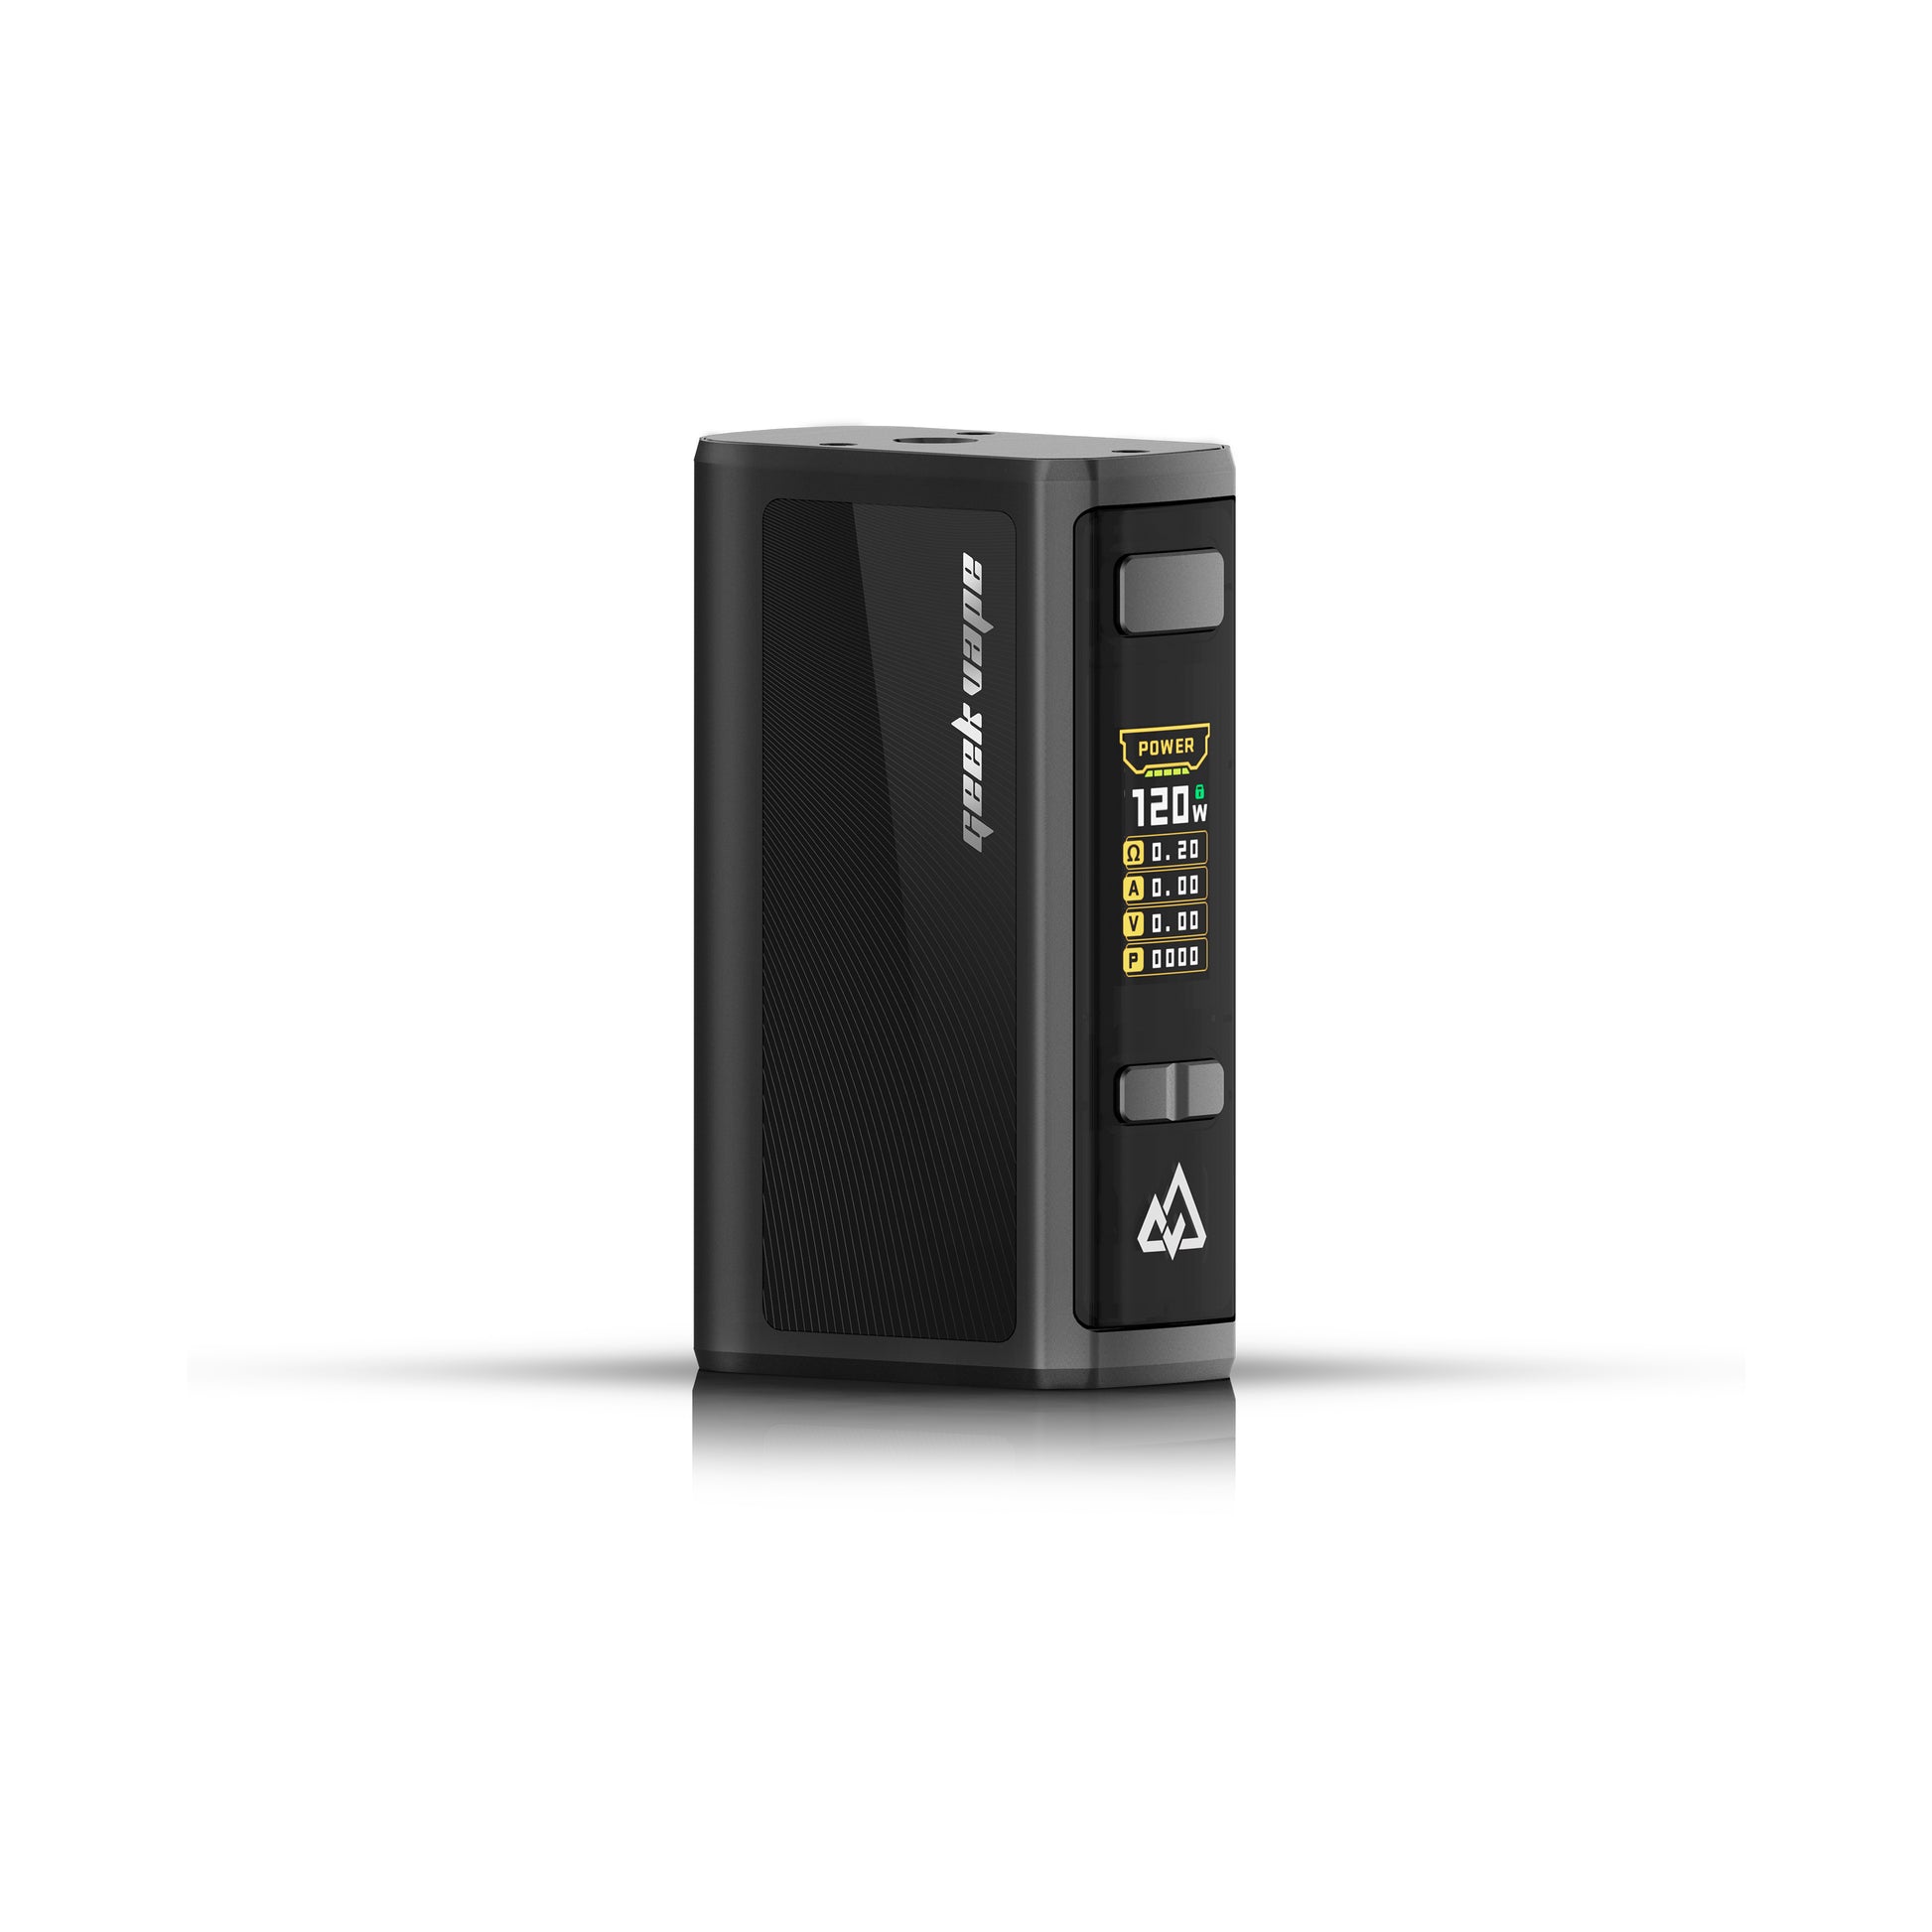 Geekvape Obelisk 120 FC Mod - Dampfpalast - E-Zigarette Online Kaufen